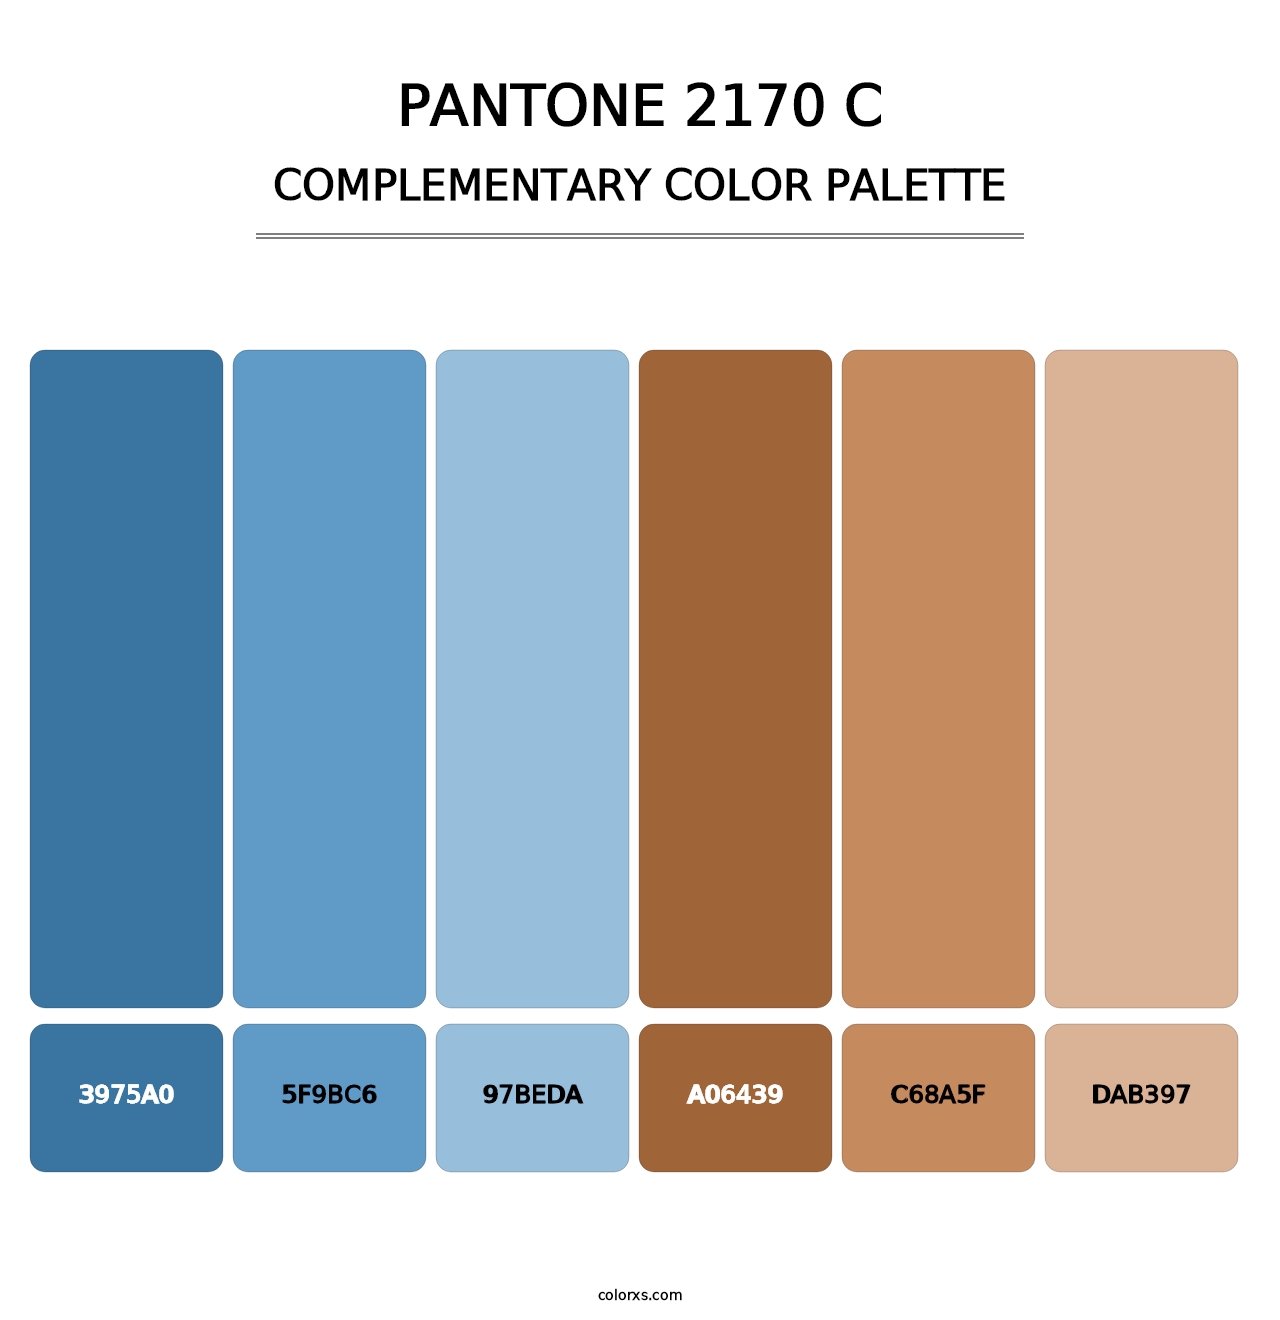 PANTONE 2170 C - Complementary Color Palette